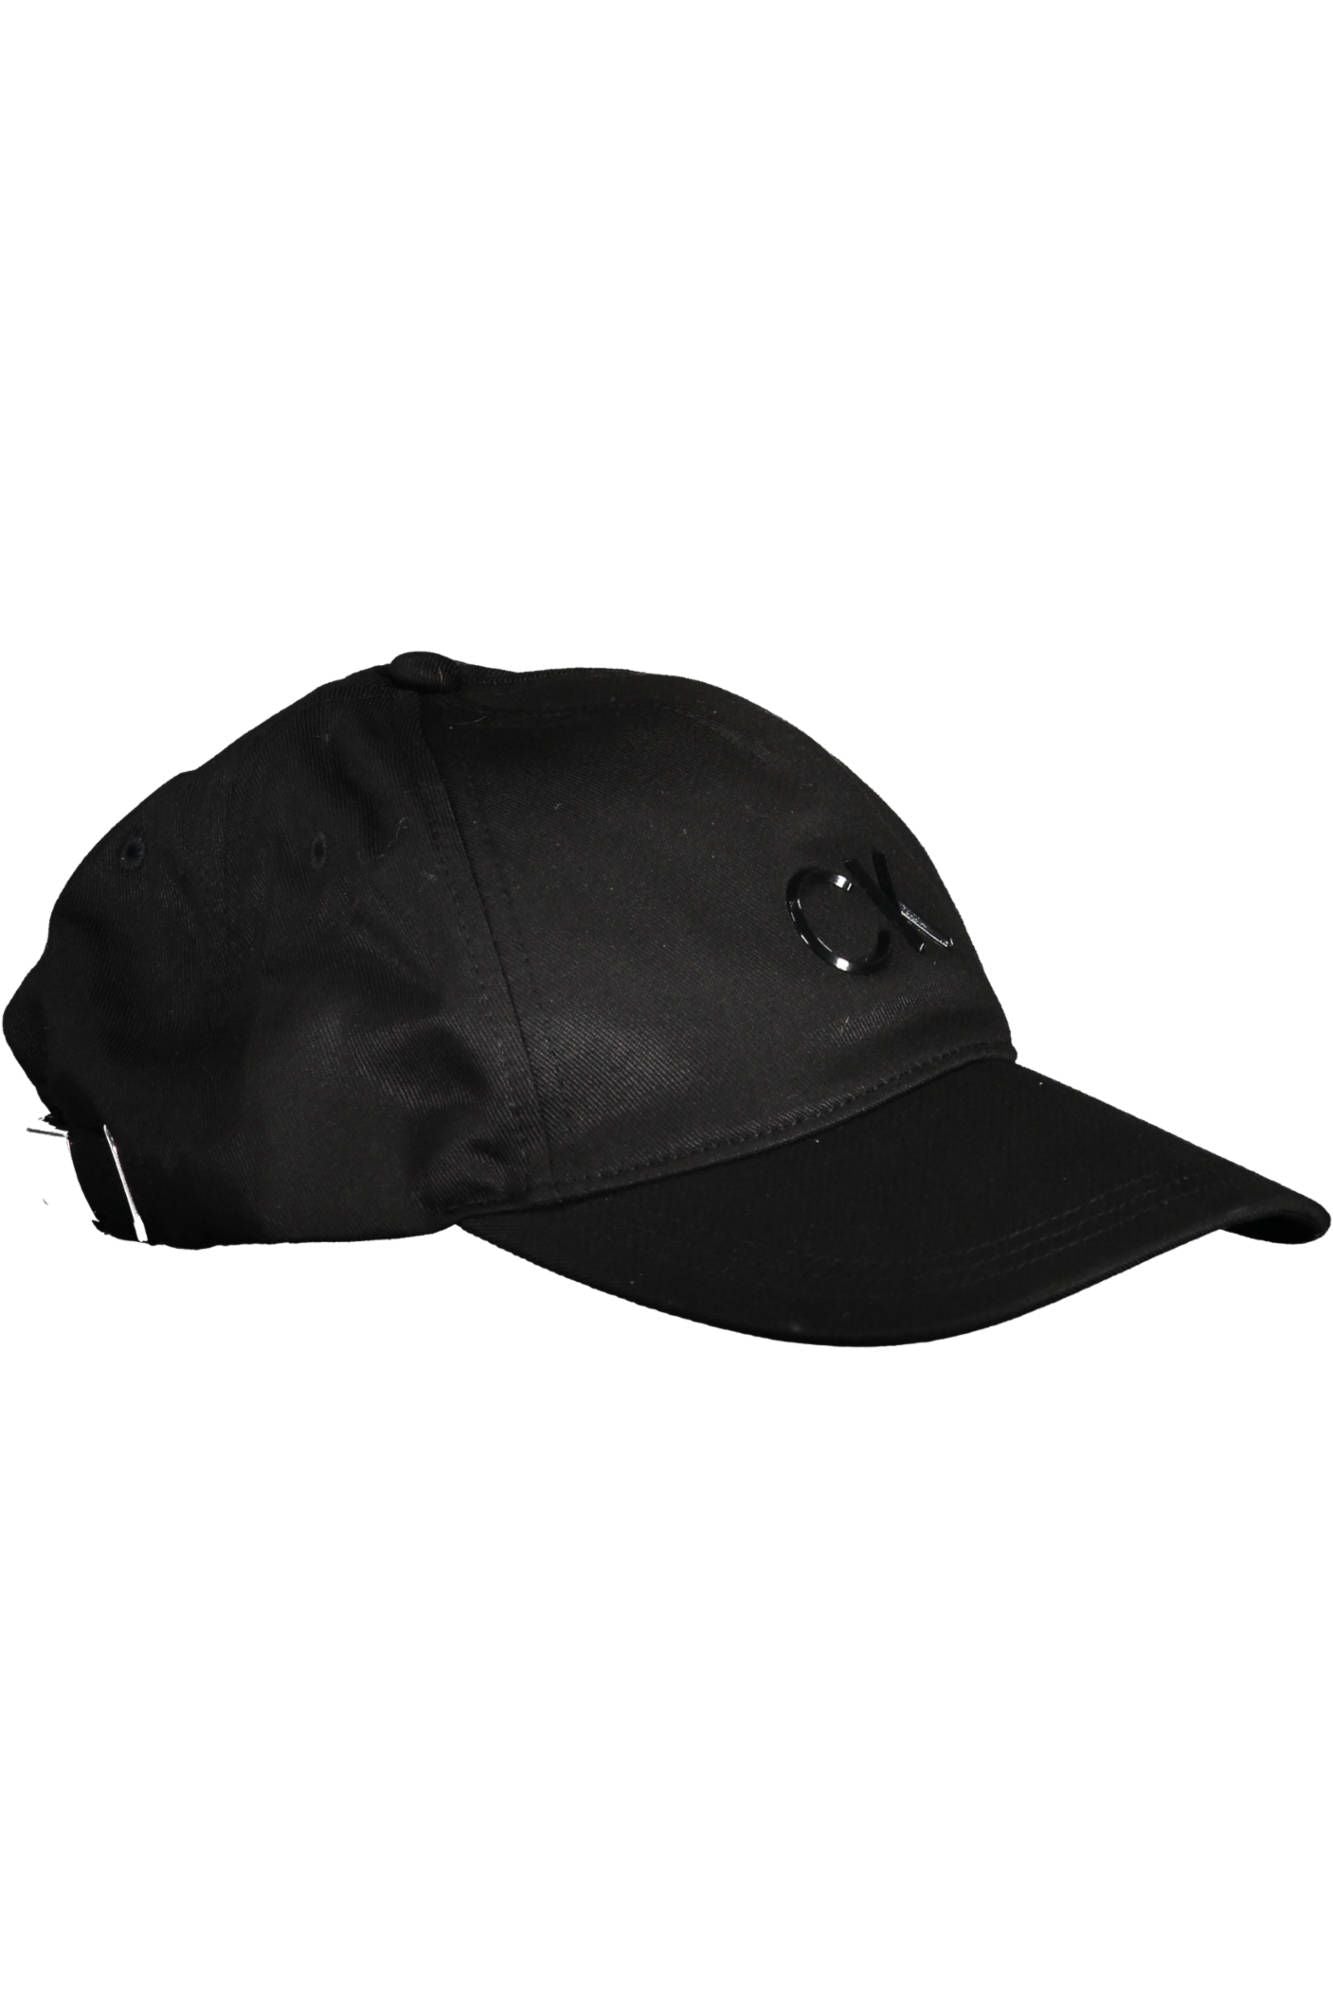 Sleek Black Visor Cap with Logo Accent